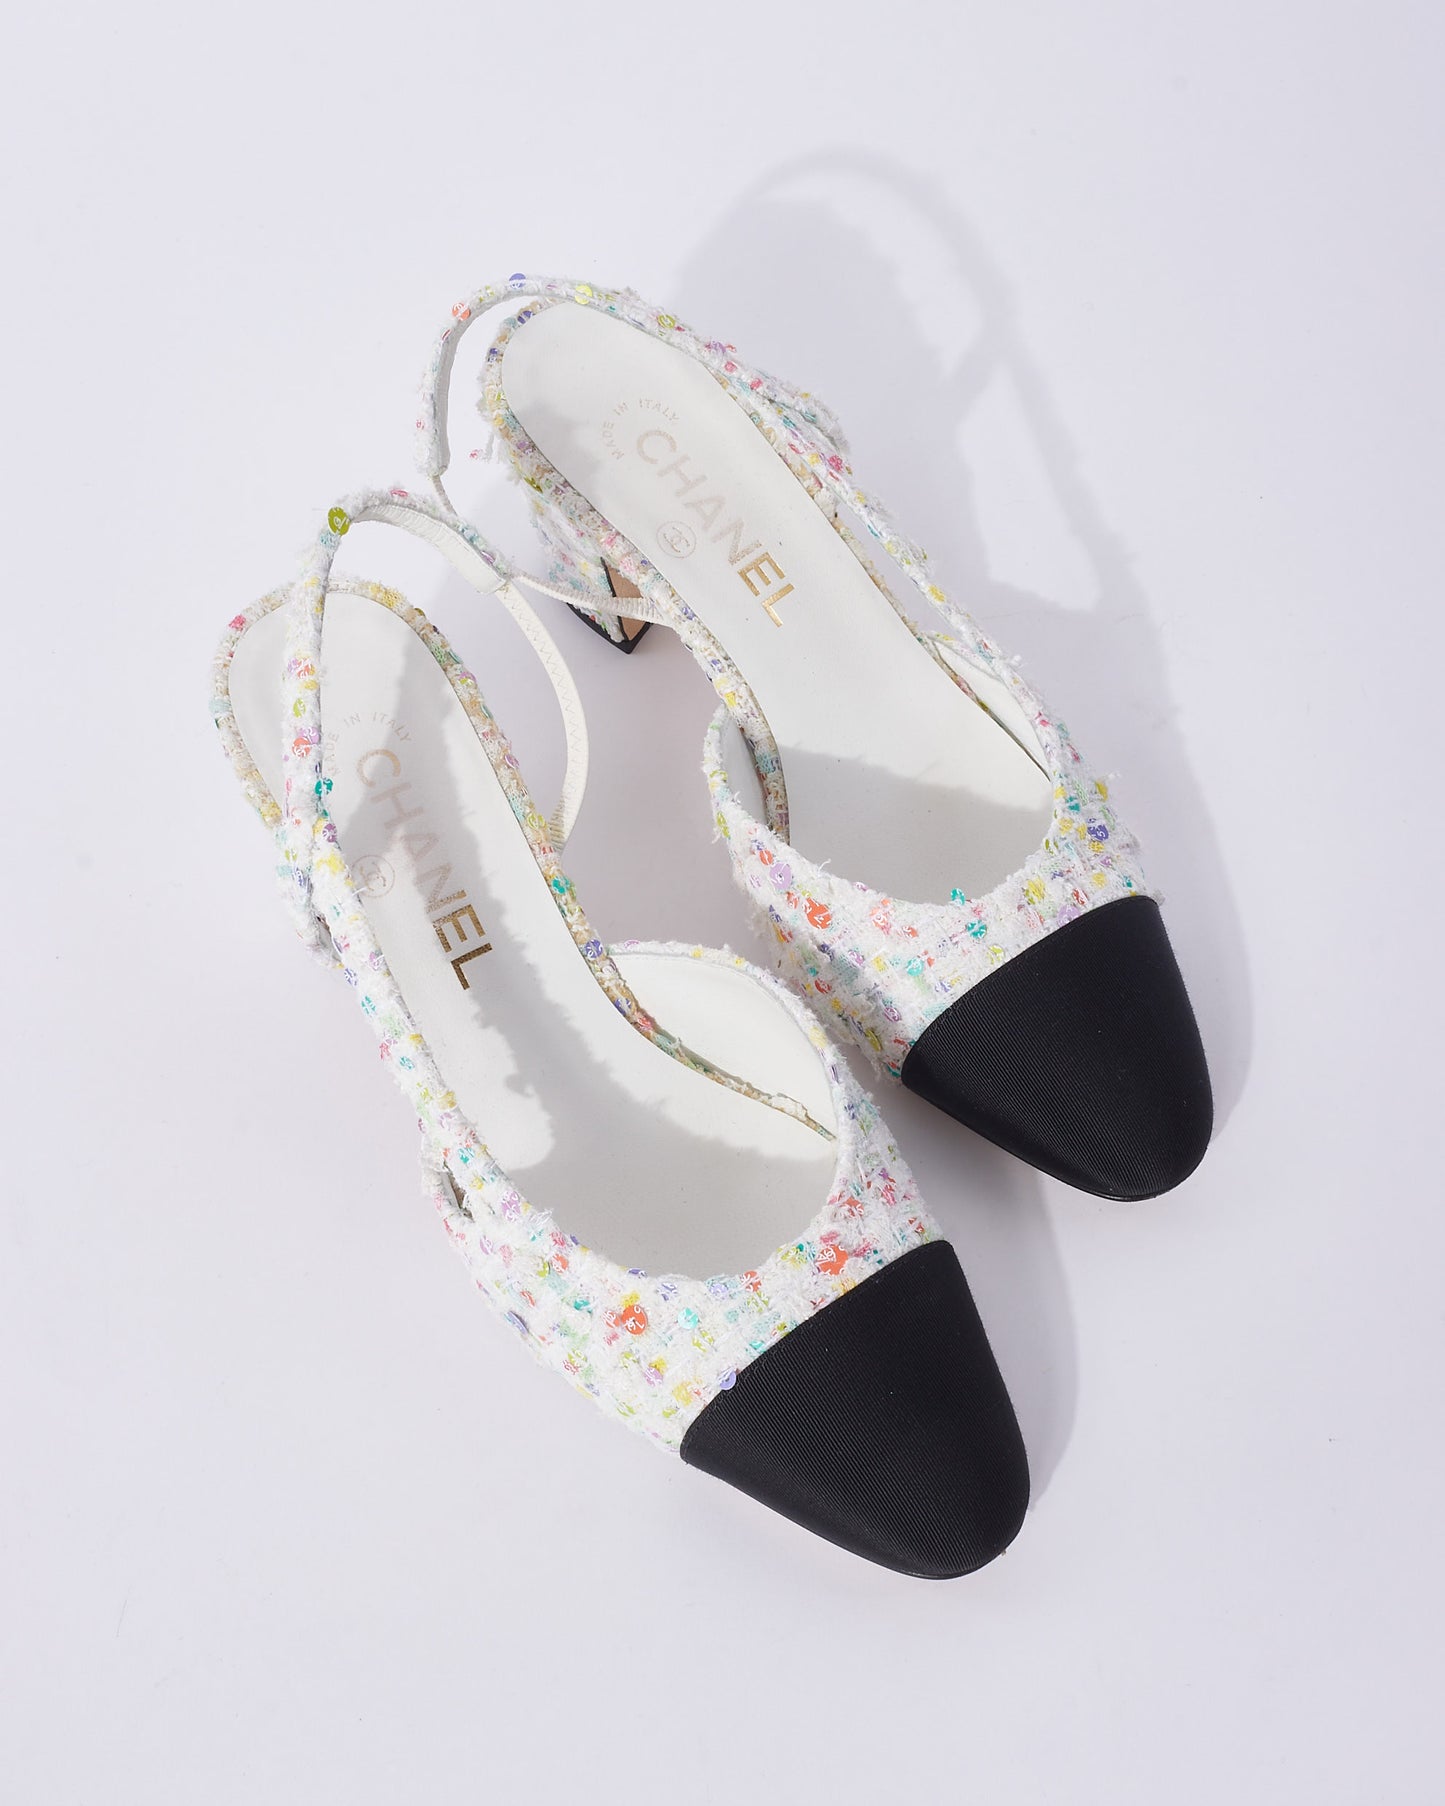 Chanel White & Multicolor Tweed Sequin Block Heel Slingback Pumps - 38C